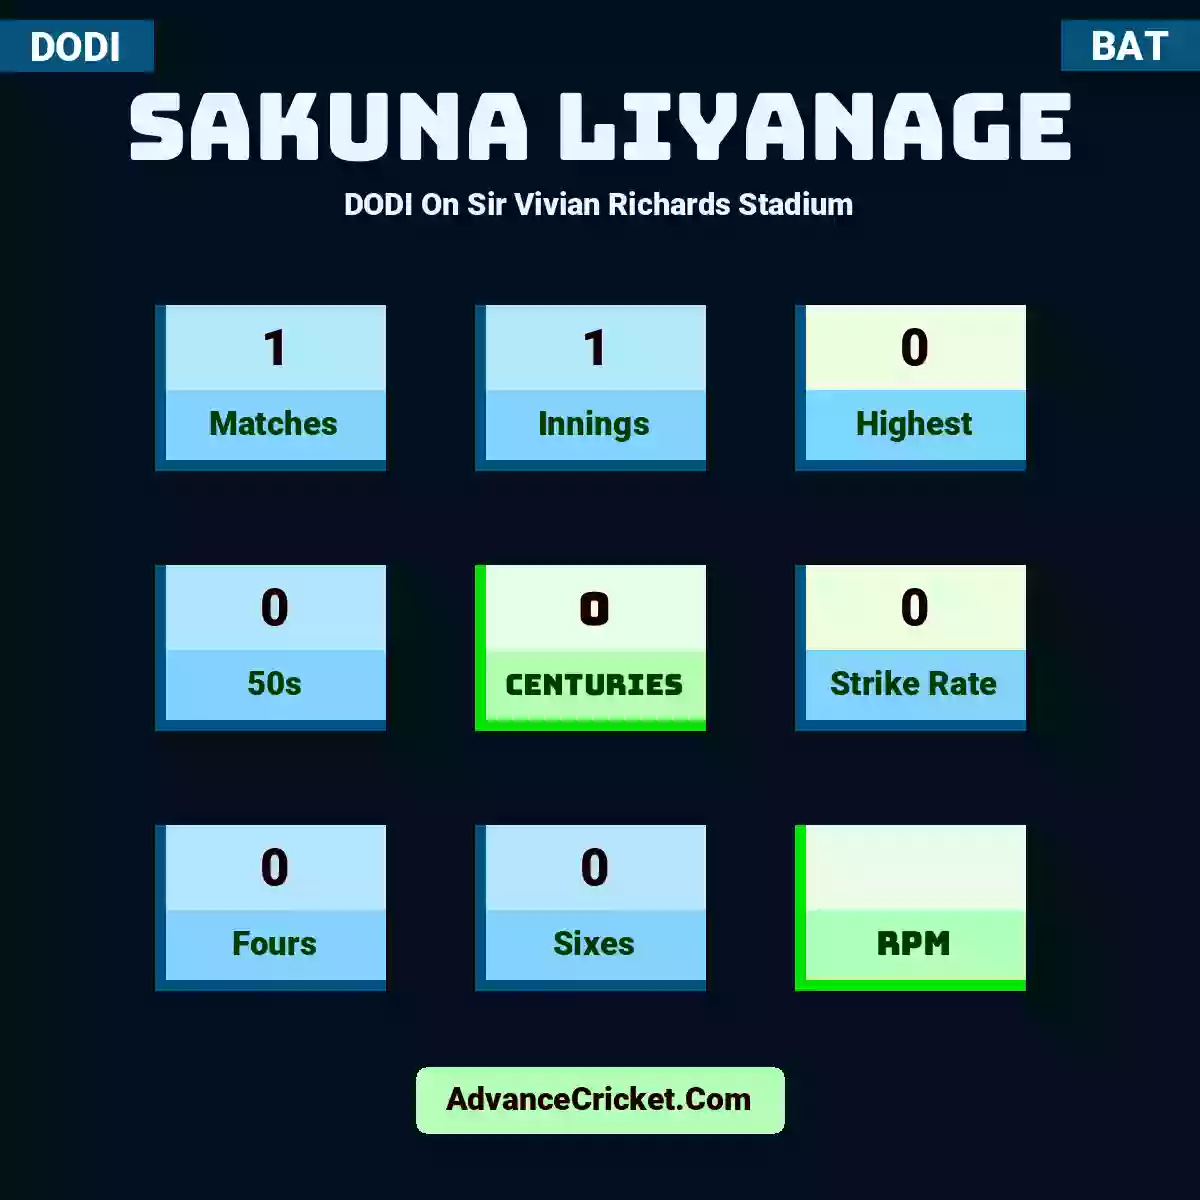 Sakuna Liyanage DODI  On Sir Vivian Richards Stadium, Sakuna Liyanage played 1 matches, scored 0 runs as highest, 0 half-centuries, and 0 centuries, with a strike rate of 0. S.Liyanage hit 0 fours and 0 sixes.